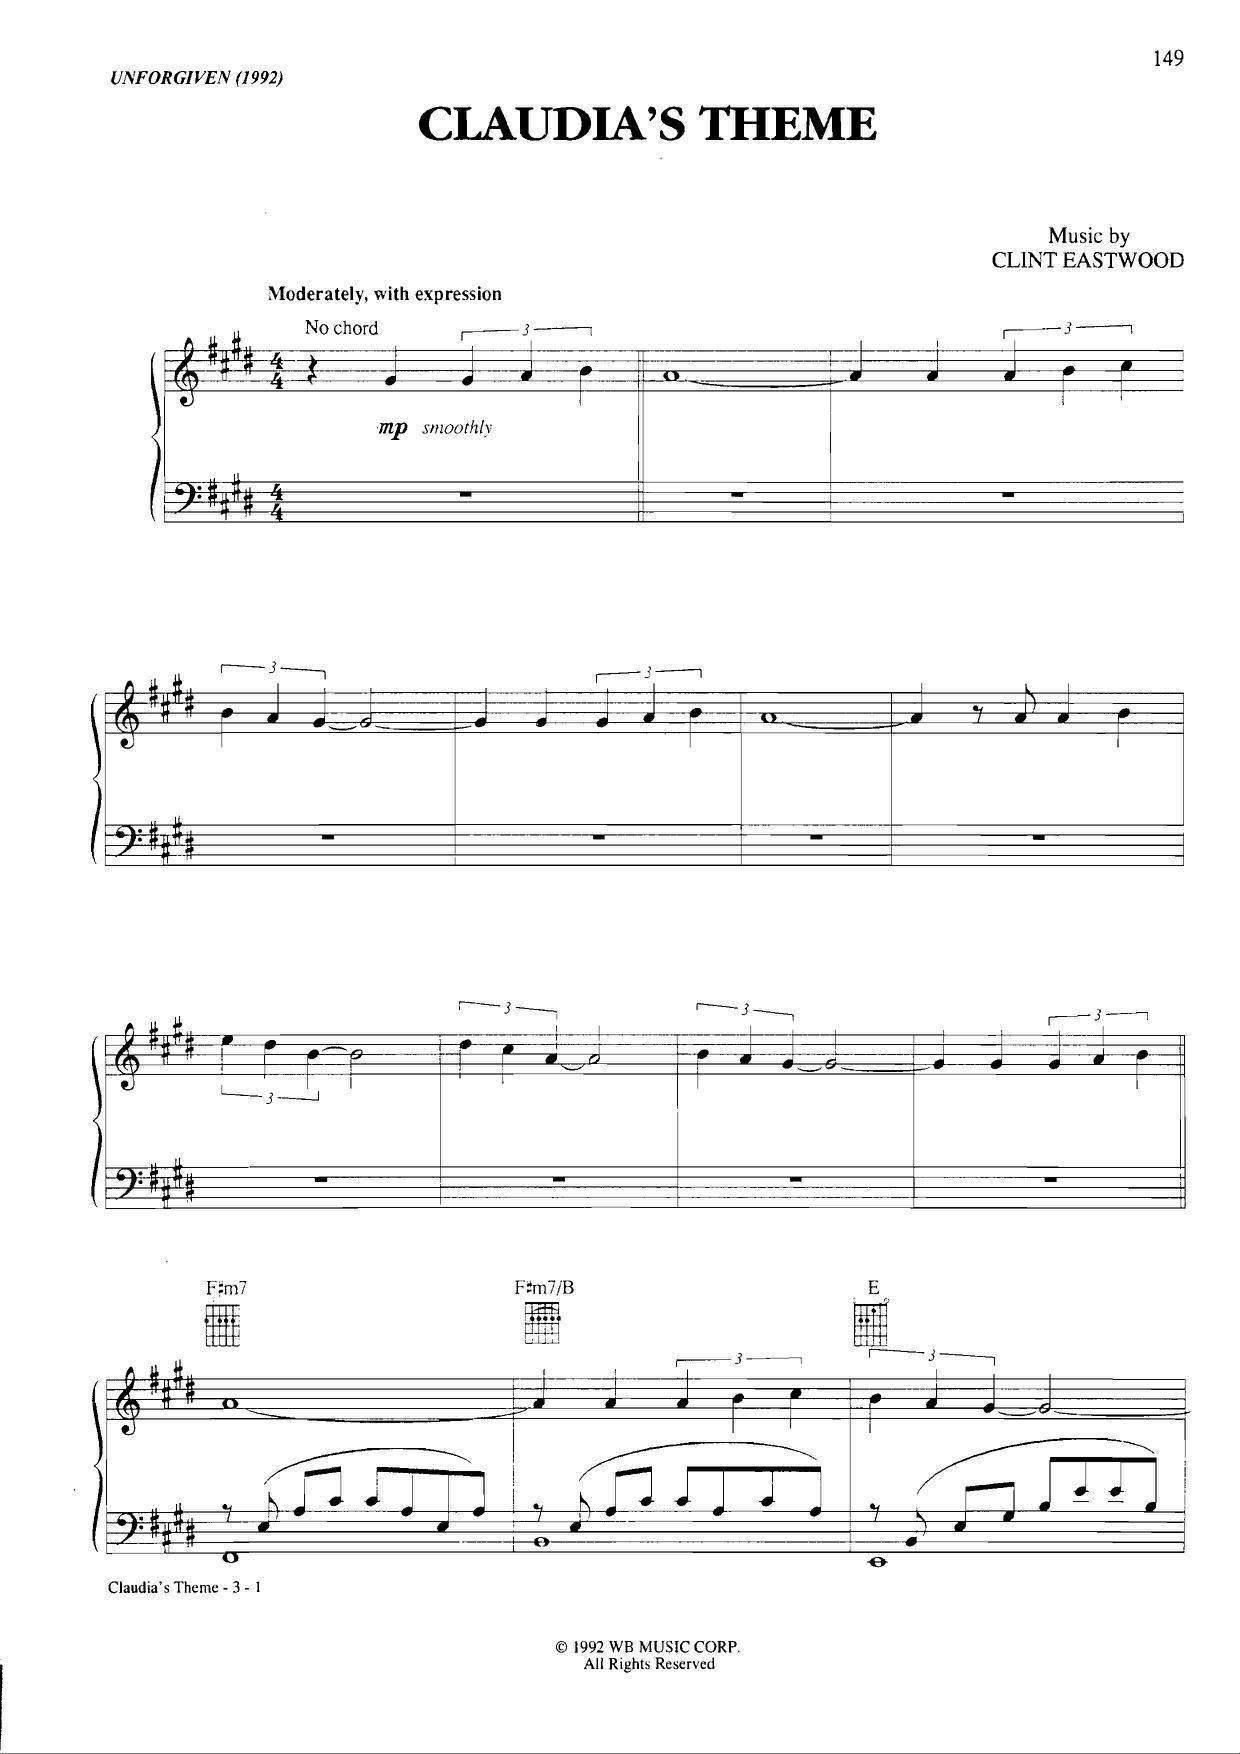 Uanforgiven - Claudia's Theme琴谱